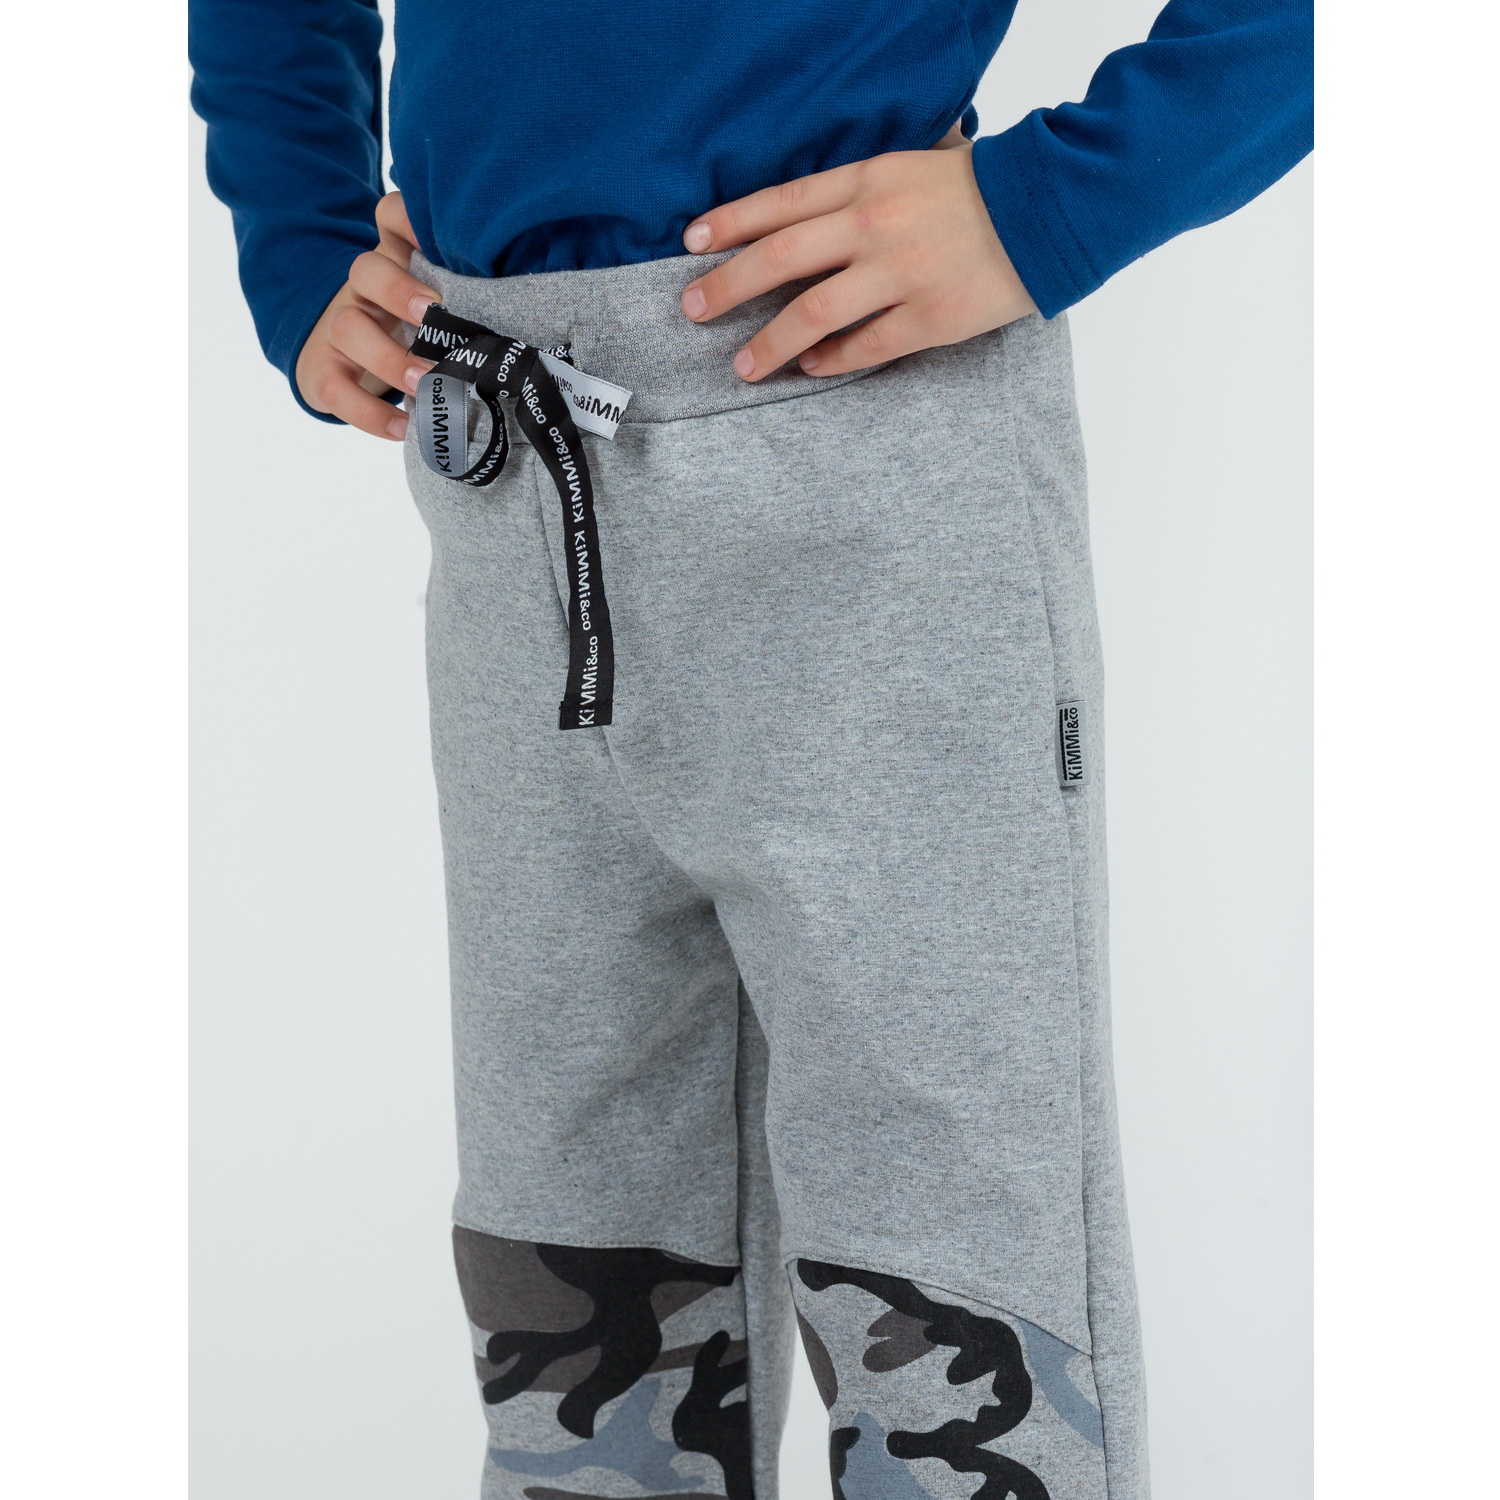 Спортивные штаны KiMMi and Co К-1408443 меланж камуфляж серый - фото 2